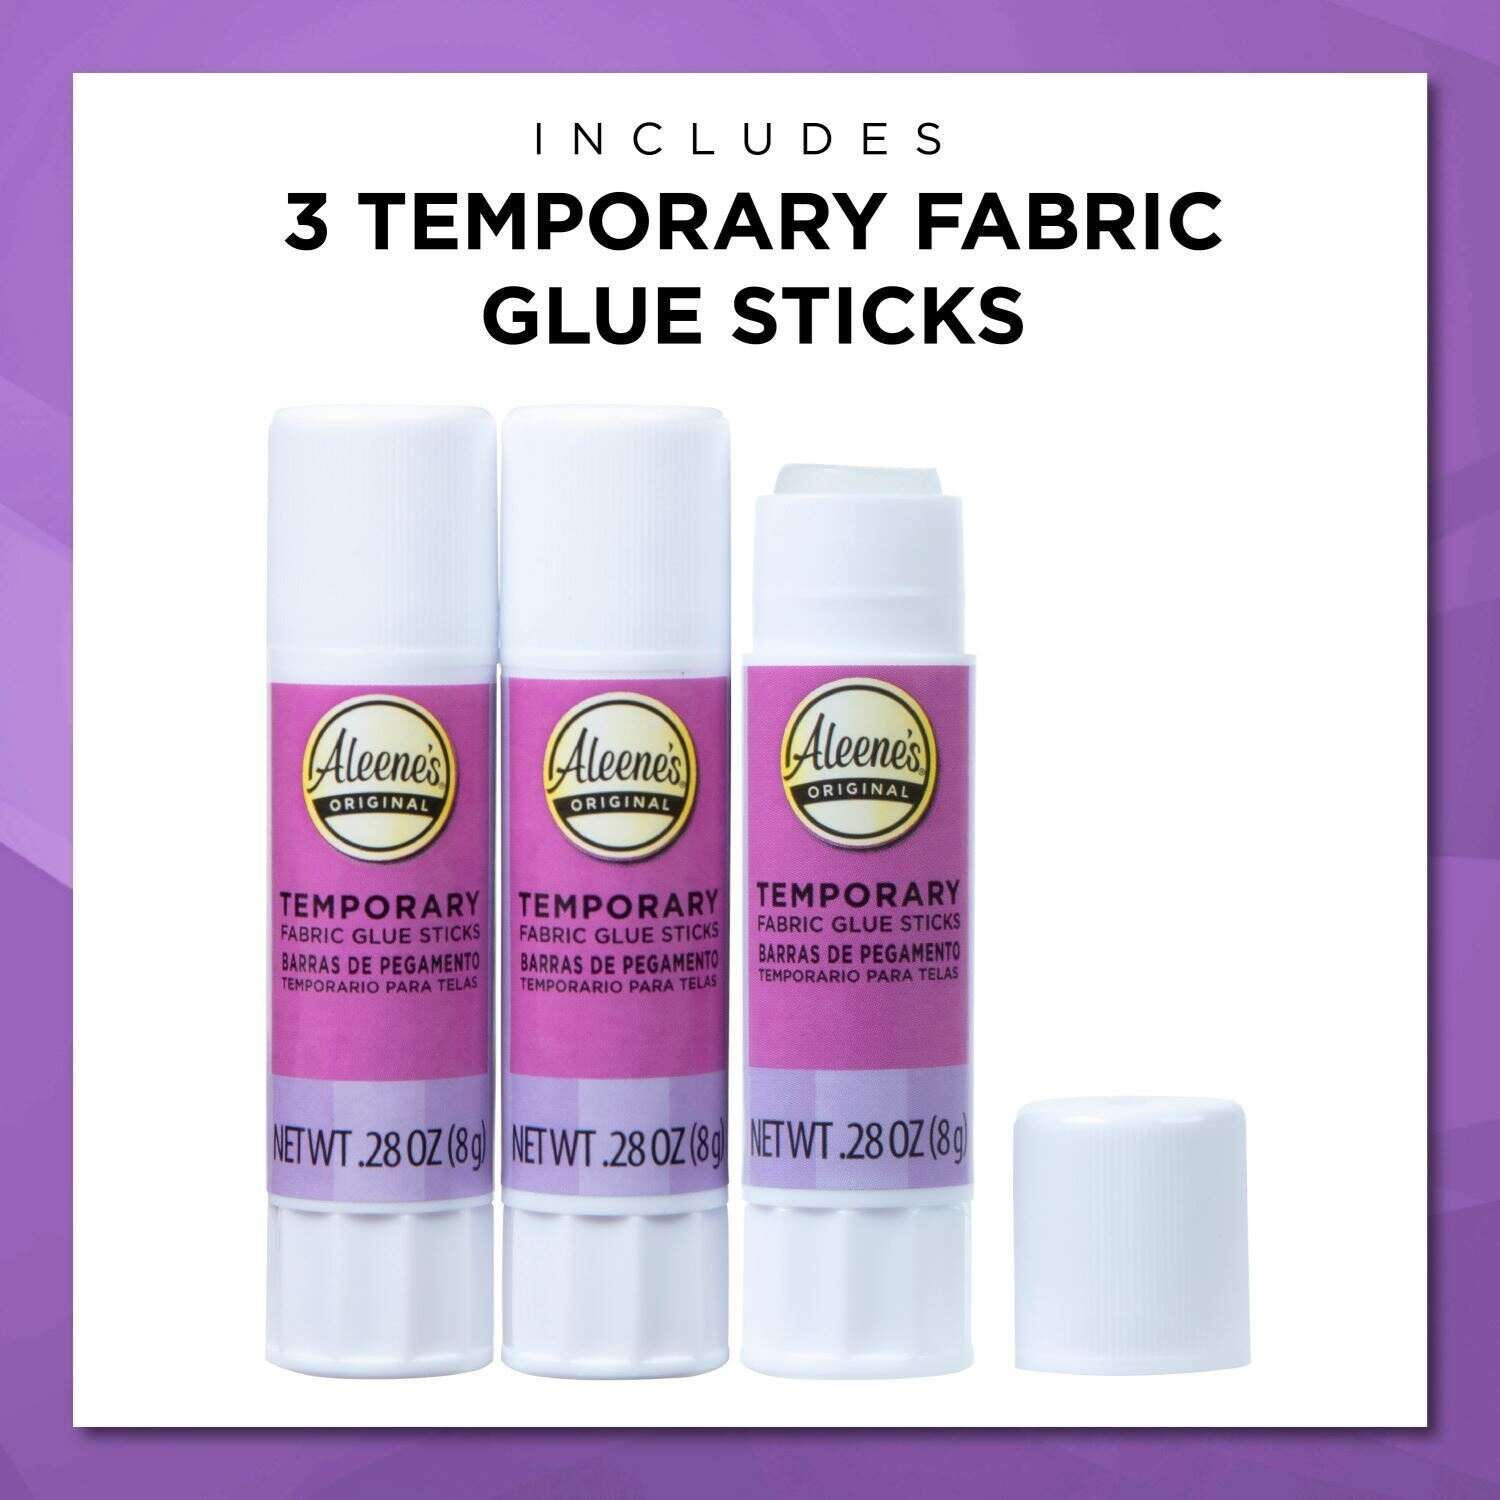 Aleene's Original Glues - Aleene's Temporary Fabric Glue Sticks 3 Pack